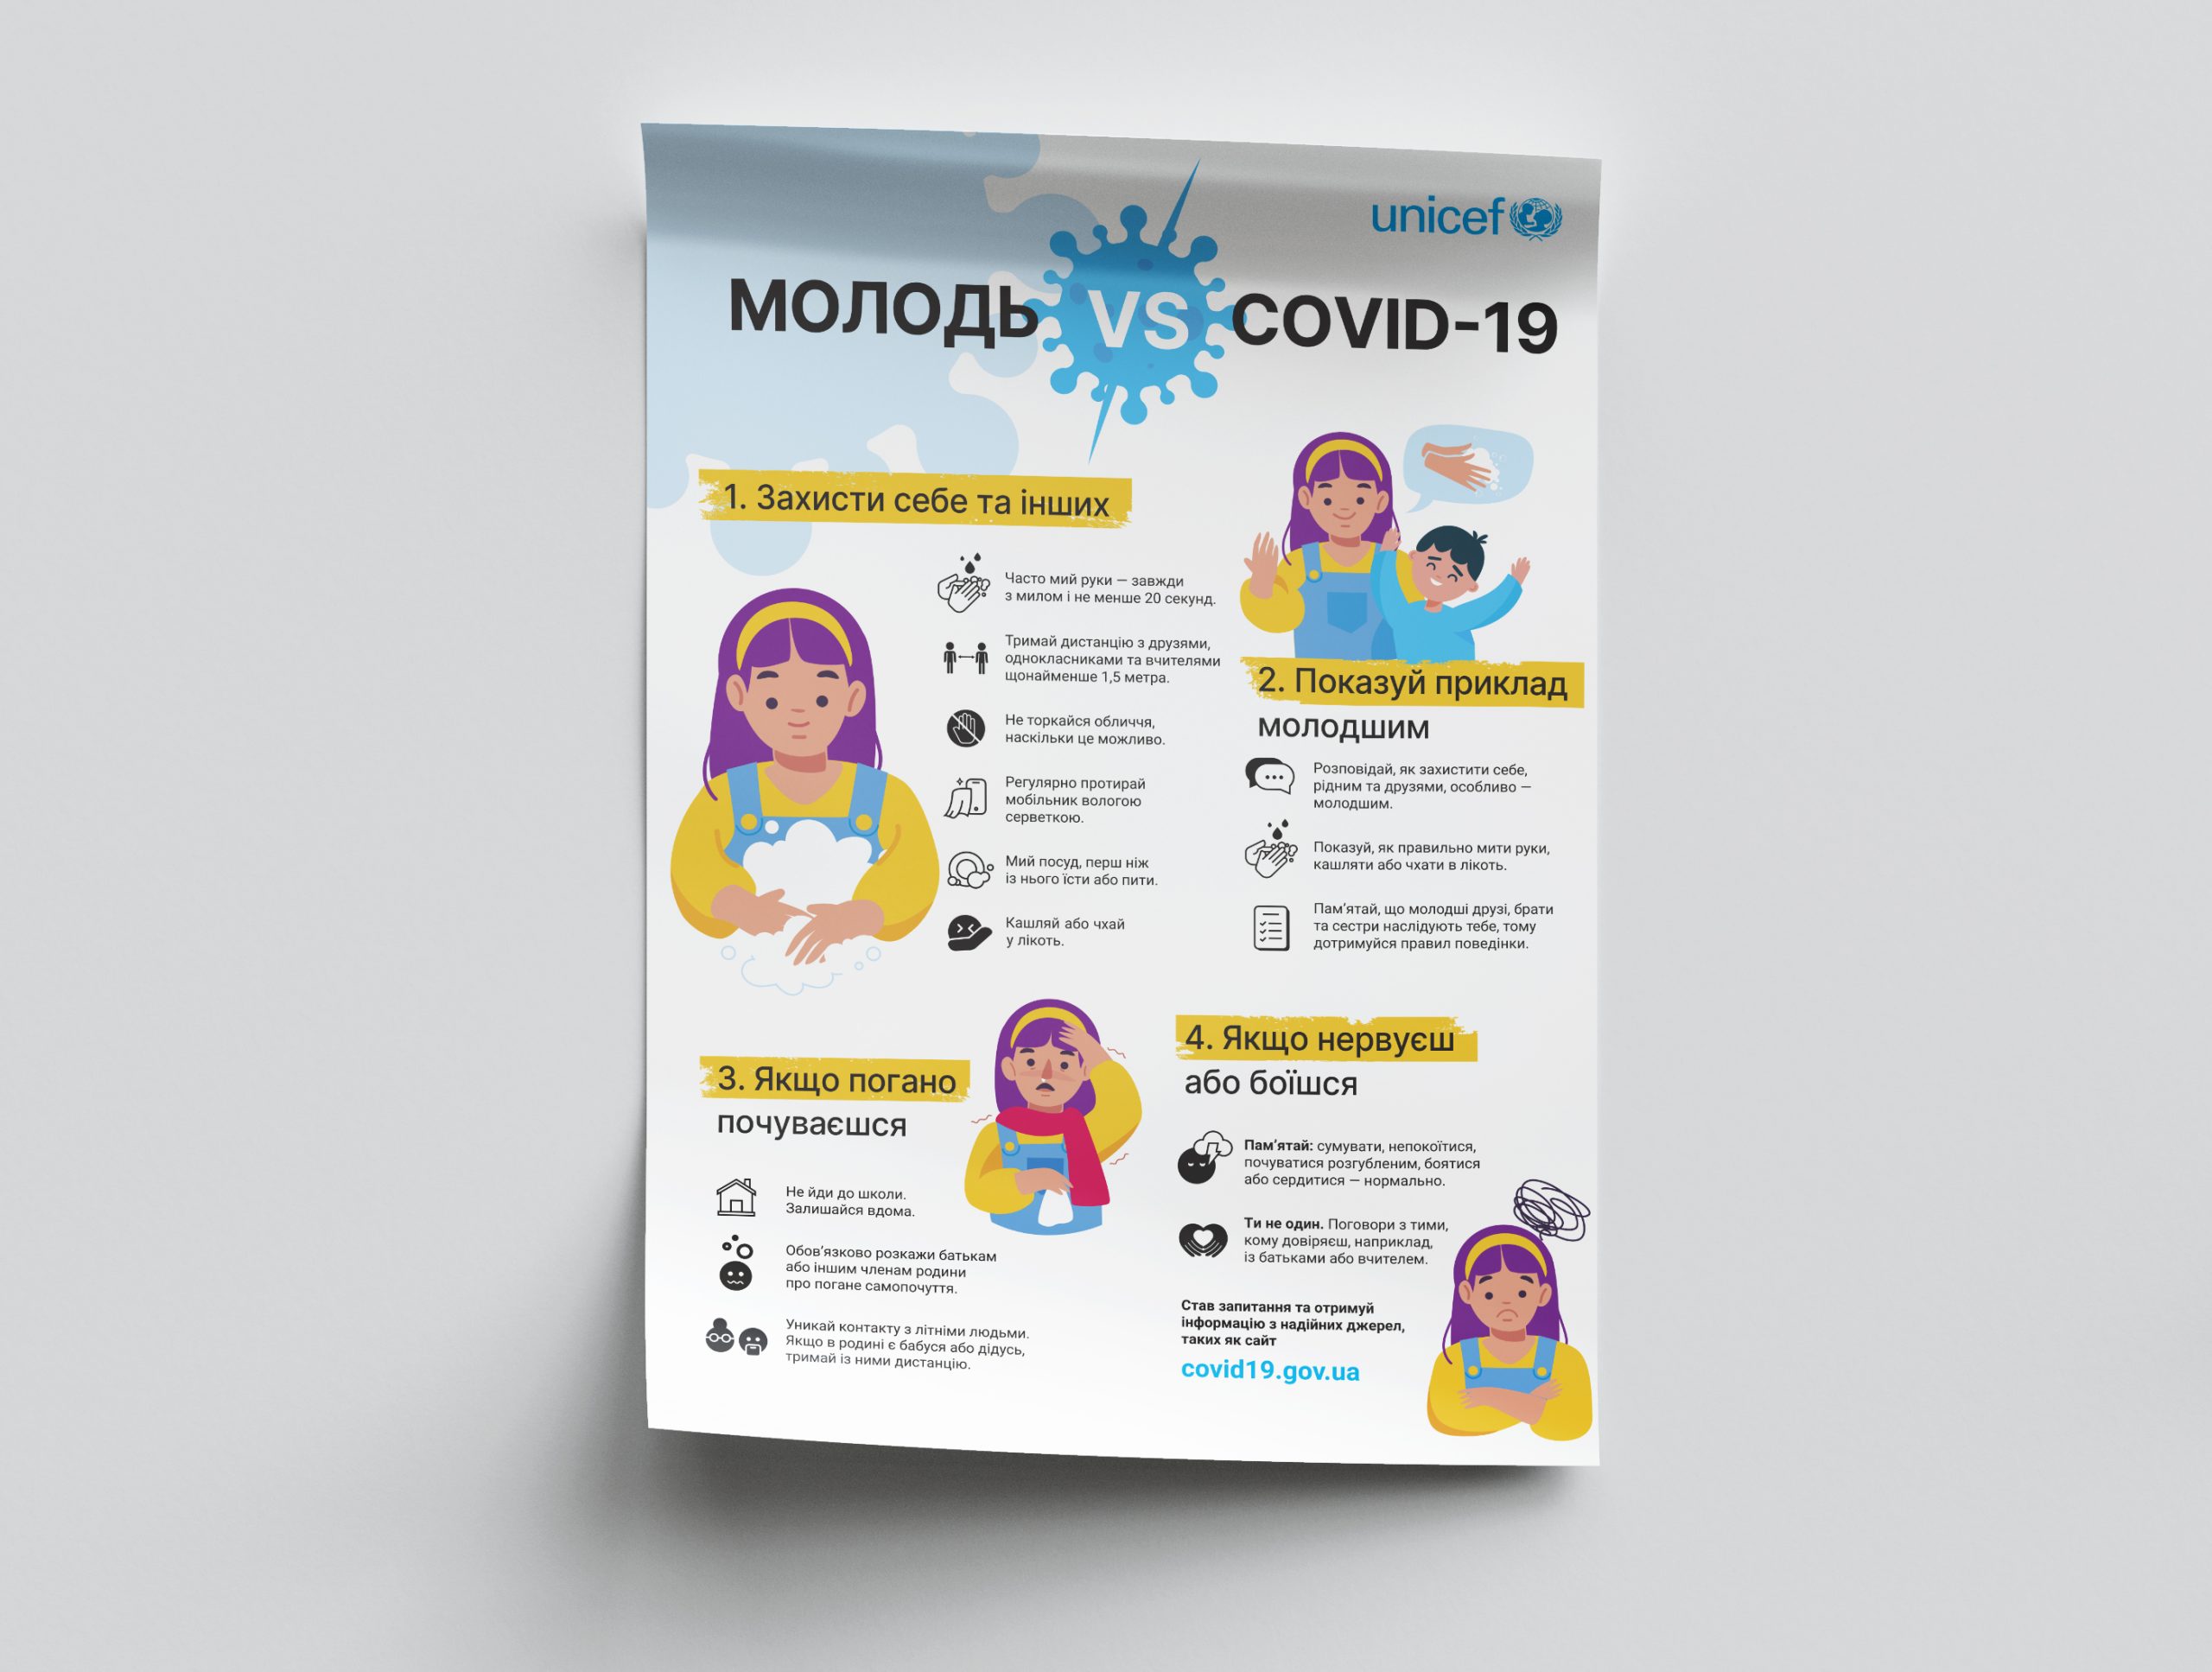 Постер “Молодь vs. COVID-19”